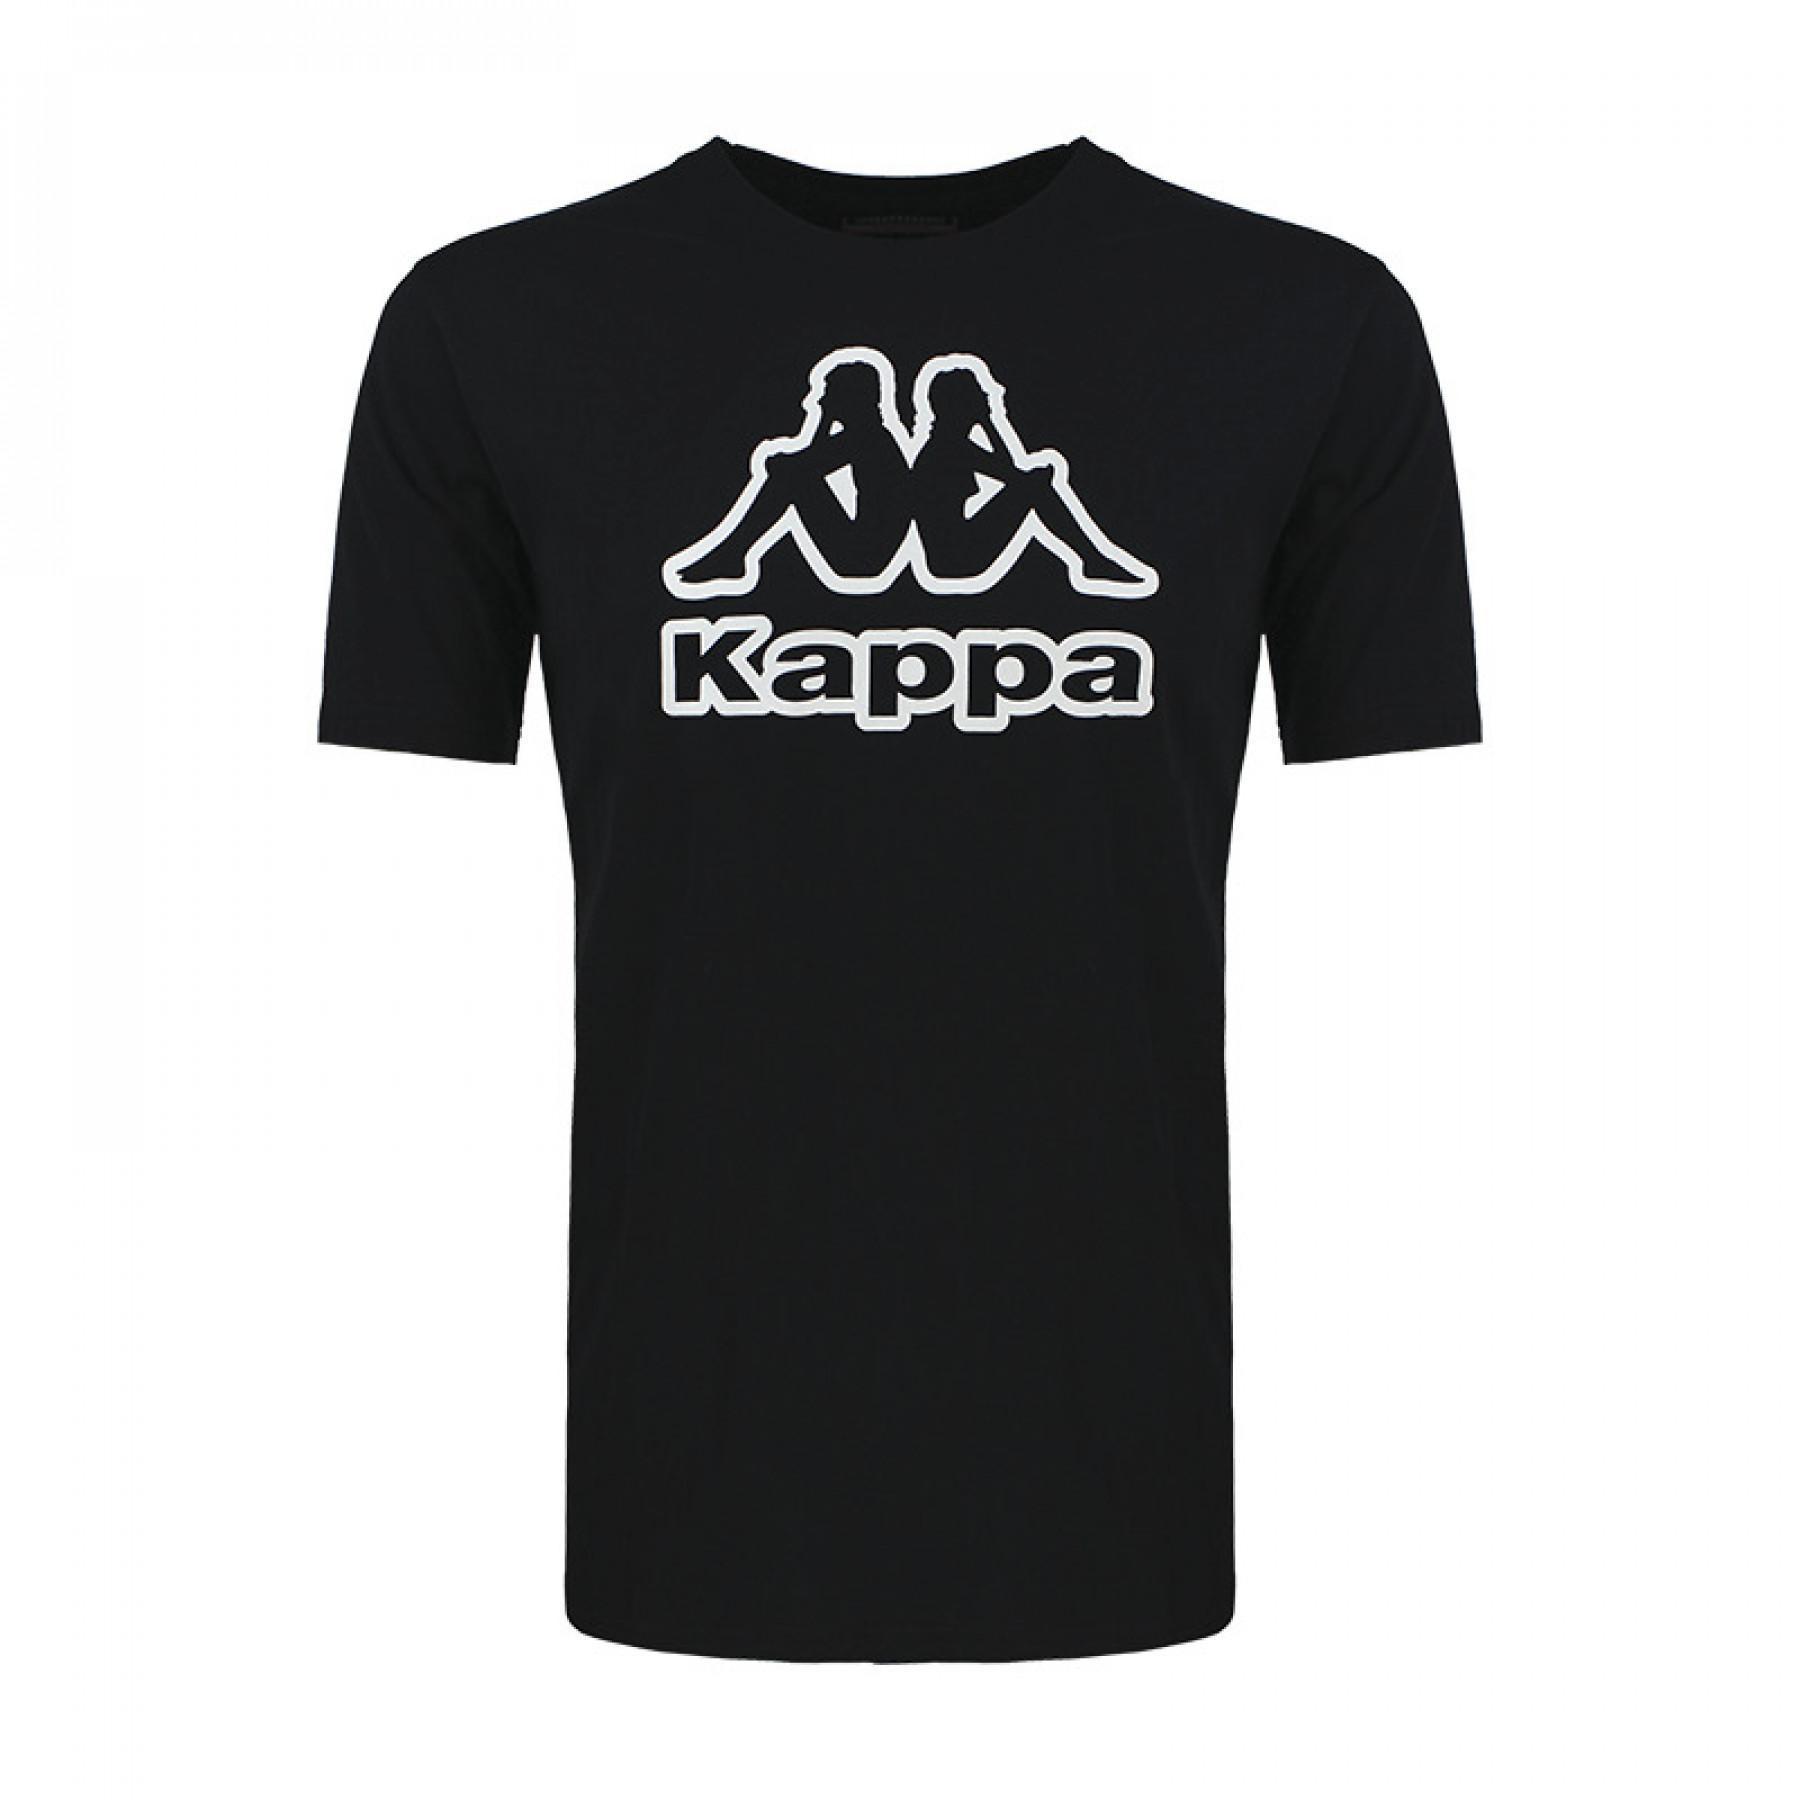 Camiseta niños Kappa Mancini (x5)